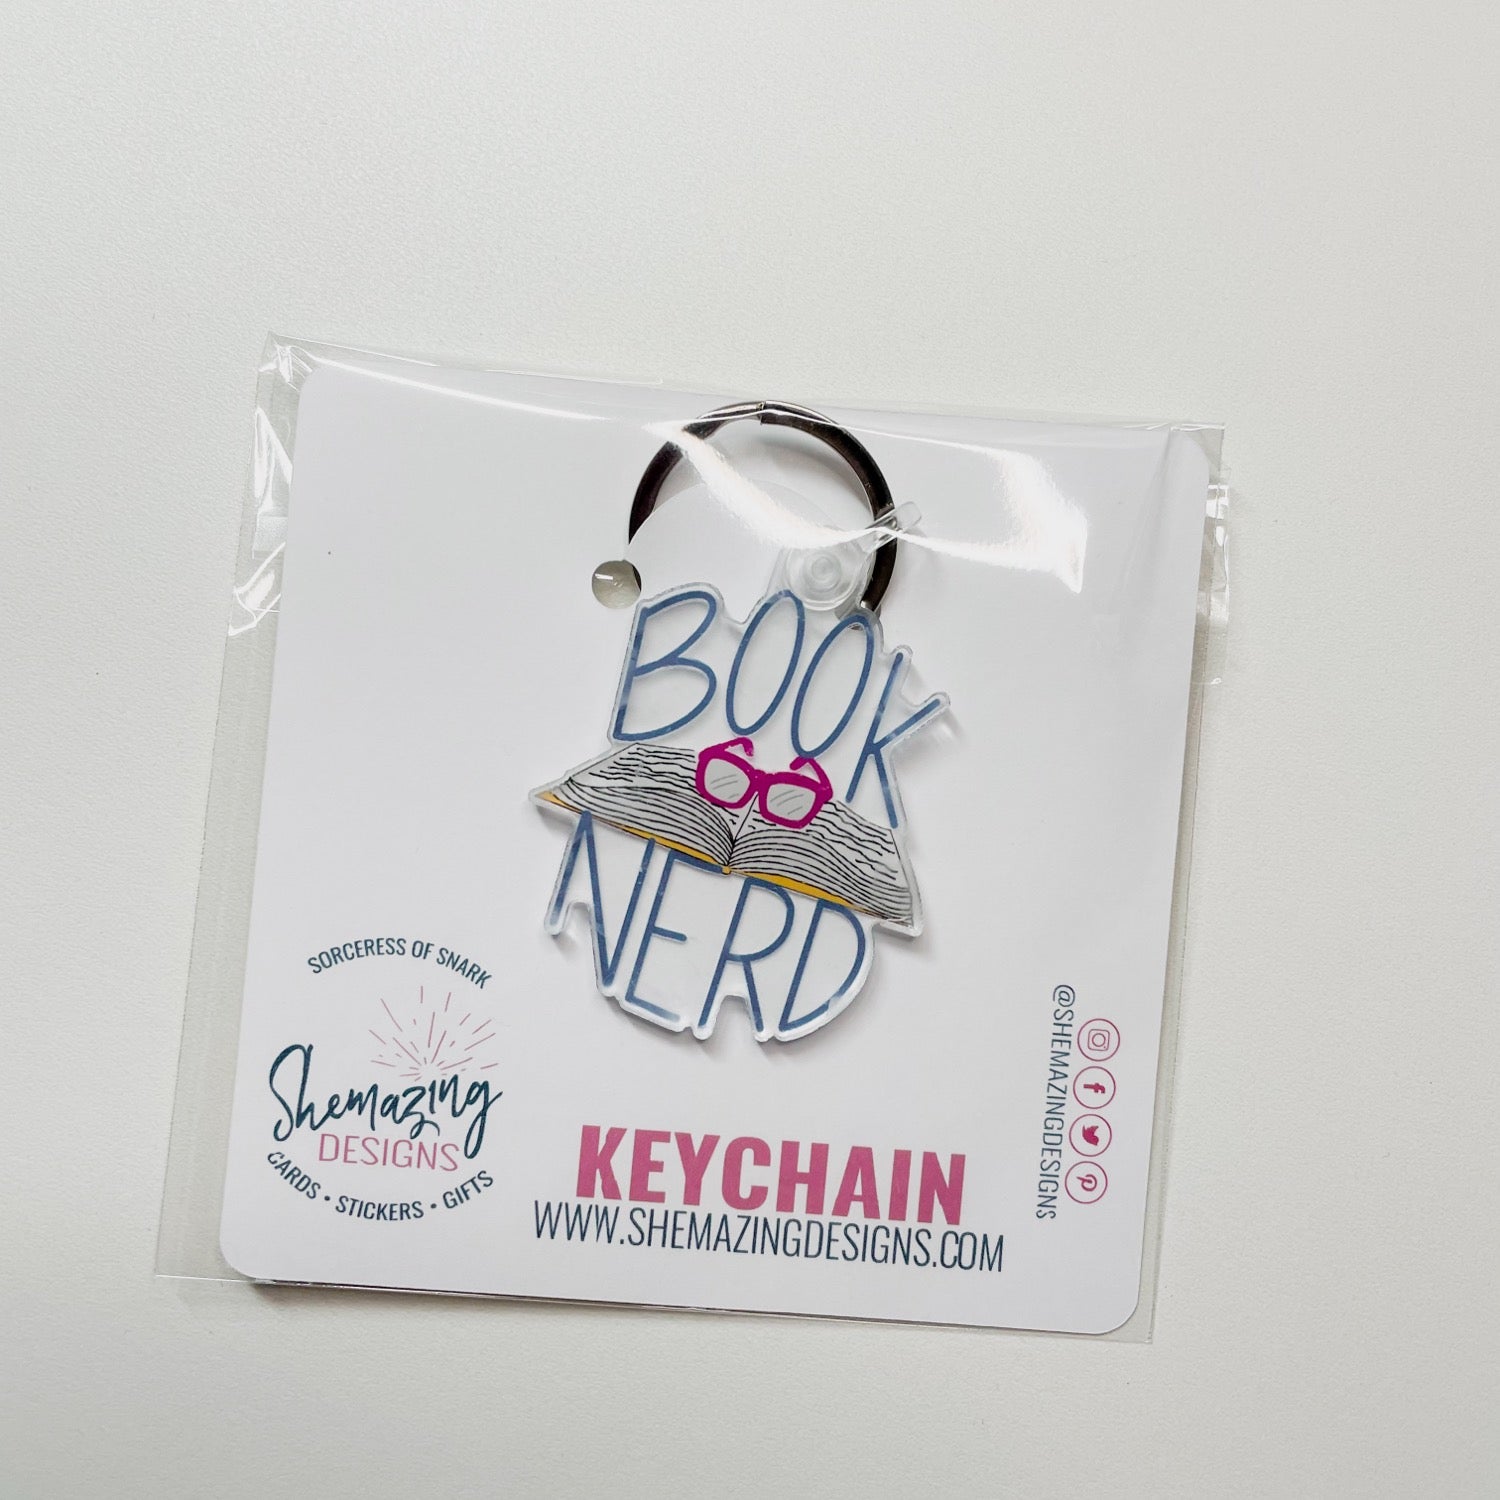 book nerd keychain in packaing